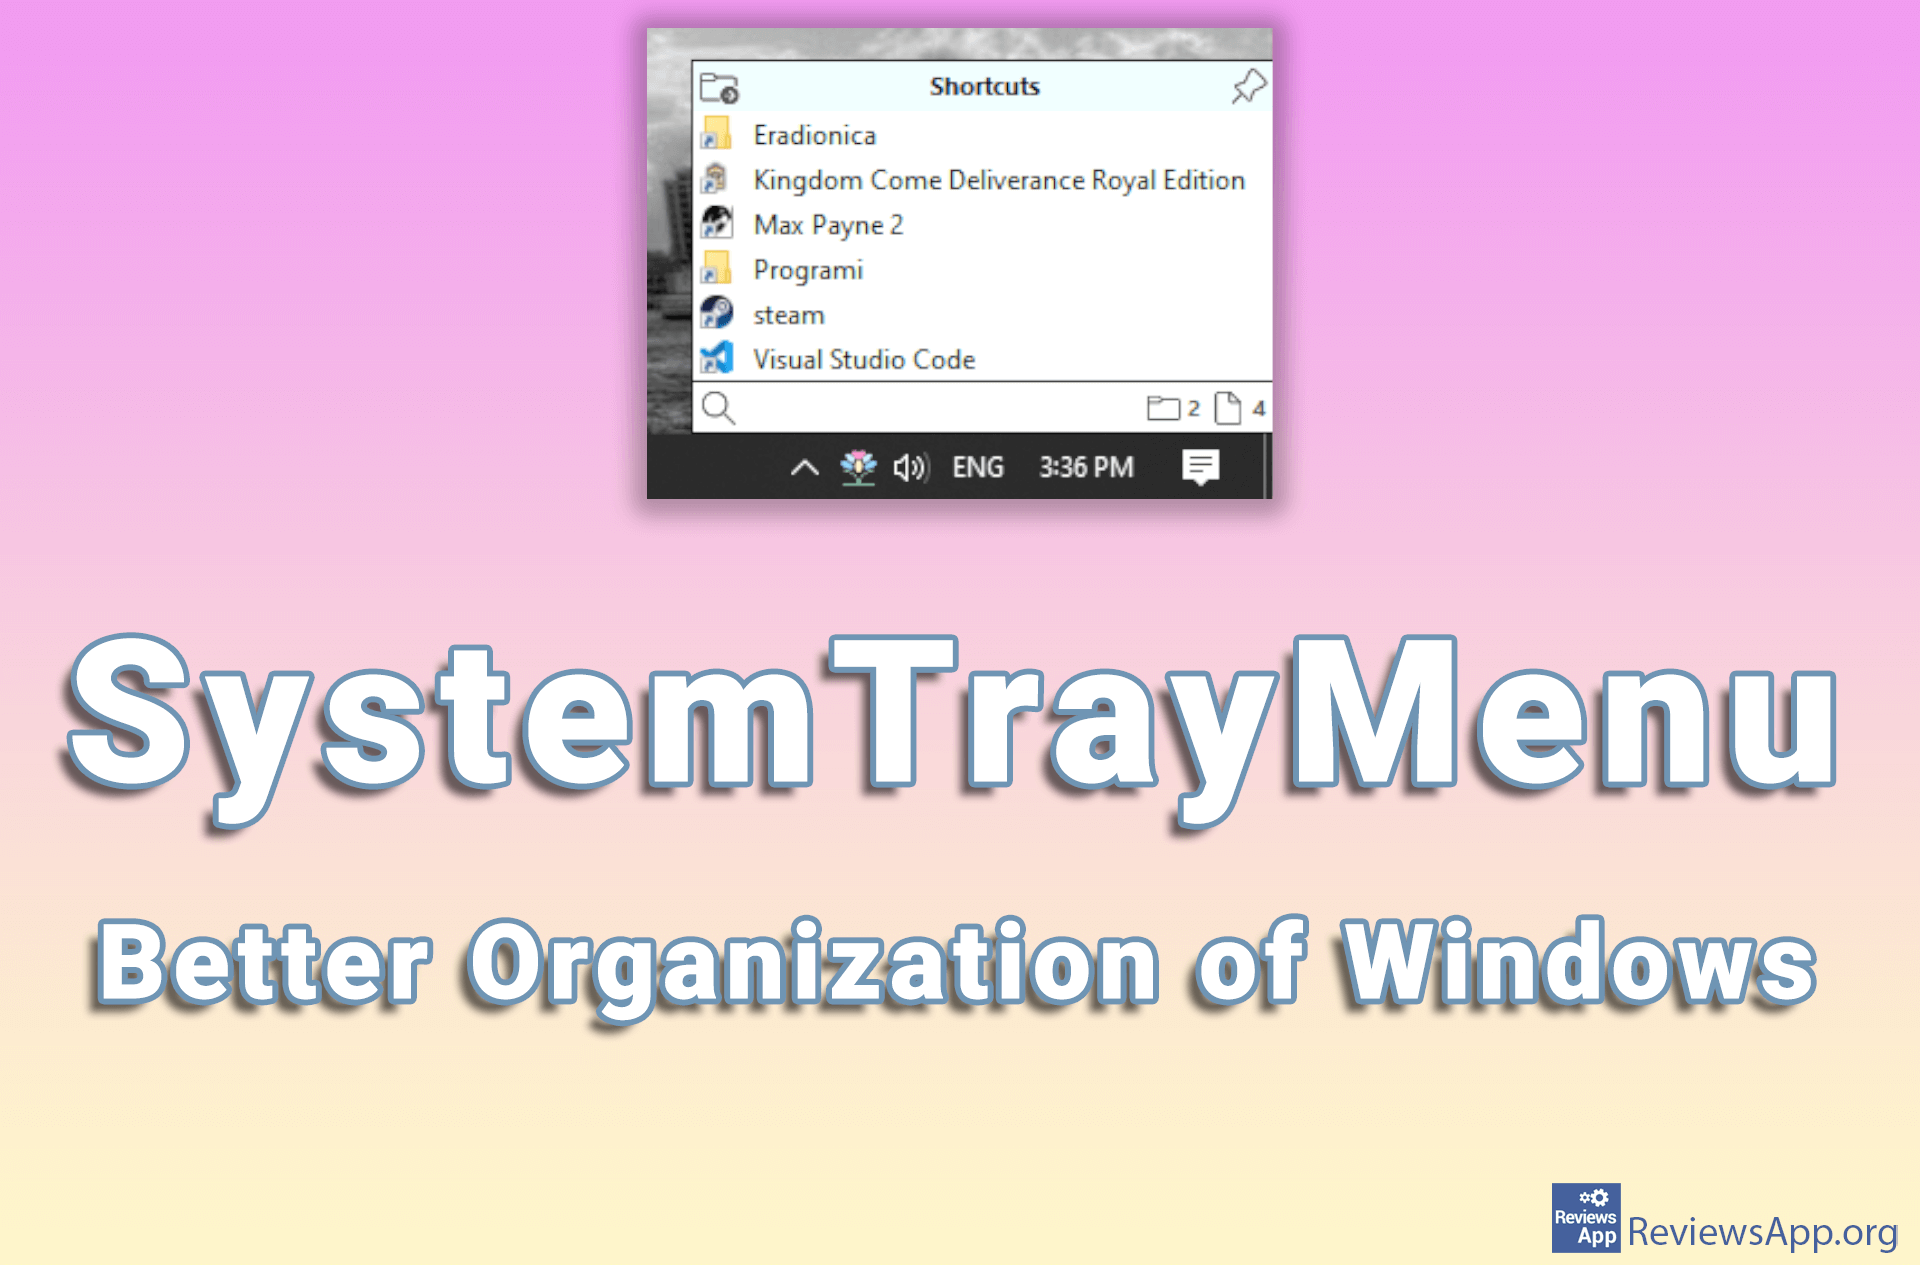 SystemTrayMenu – Better Organization of Windows